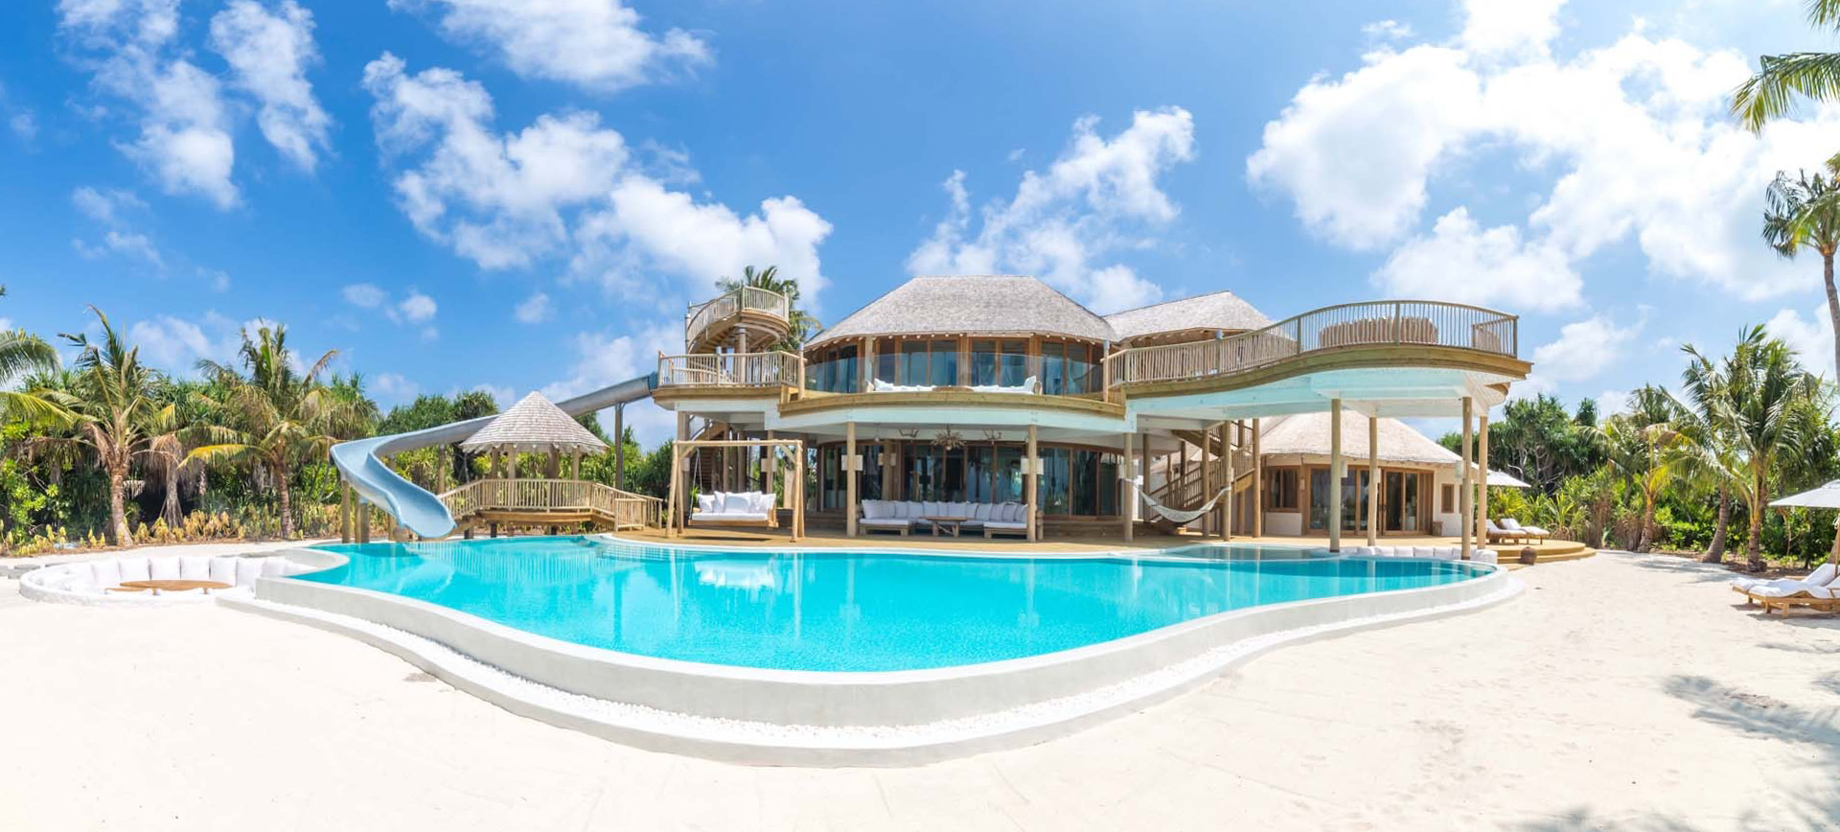 Soneva Jani Resort – Noonu Atoll, Medhufaru, Maldives – 3 Bedroom Island Reserve Villa White Sand Pool Deck